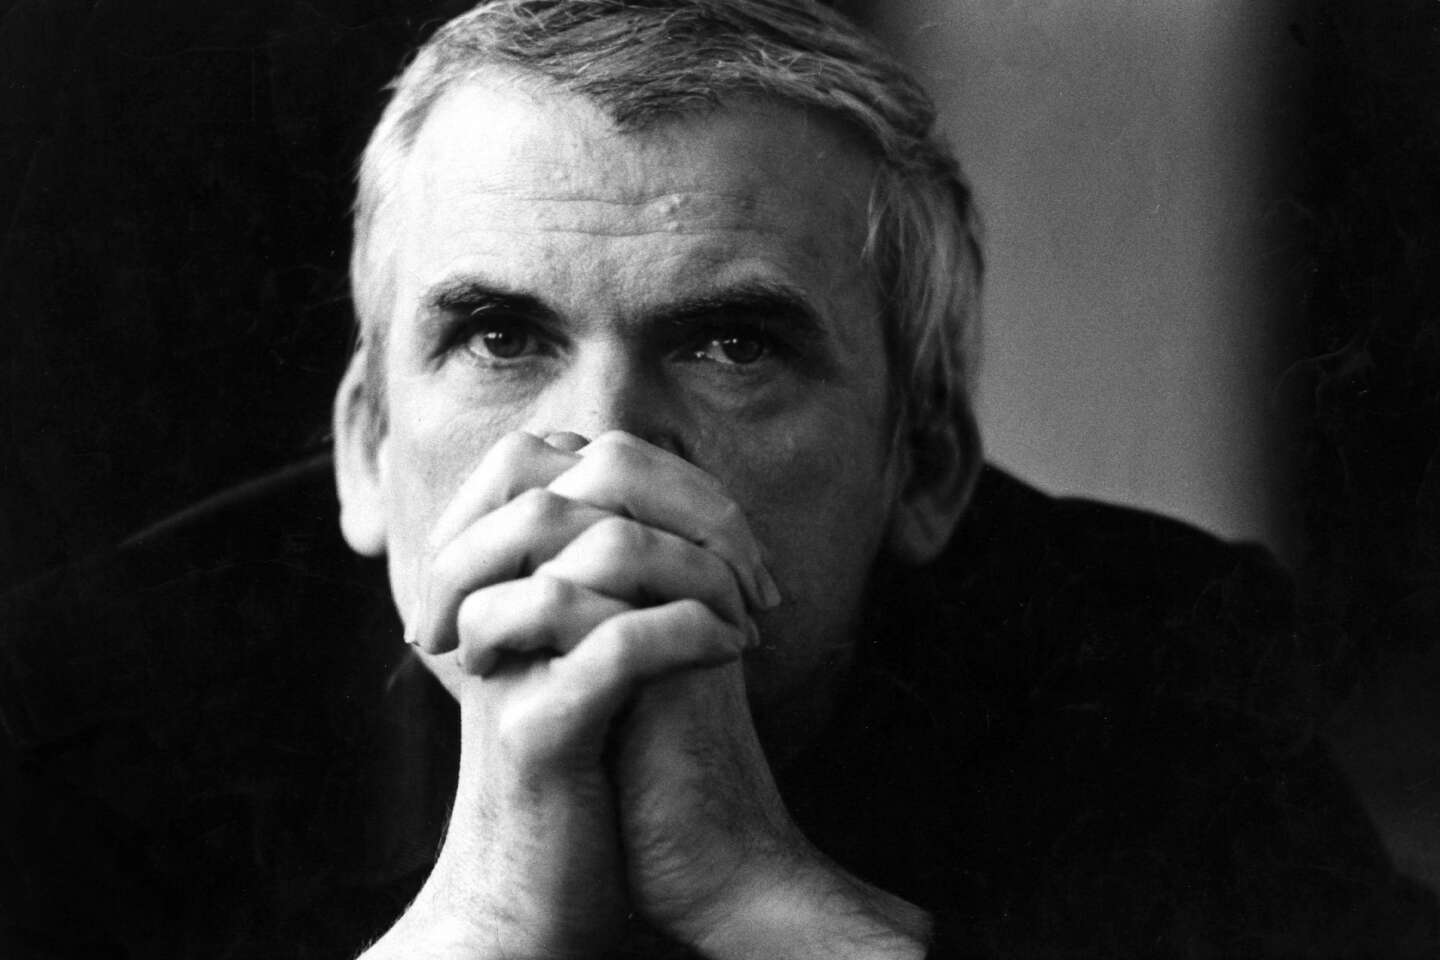 Milan Kundera, existential novelist, has died